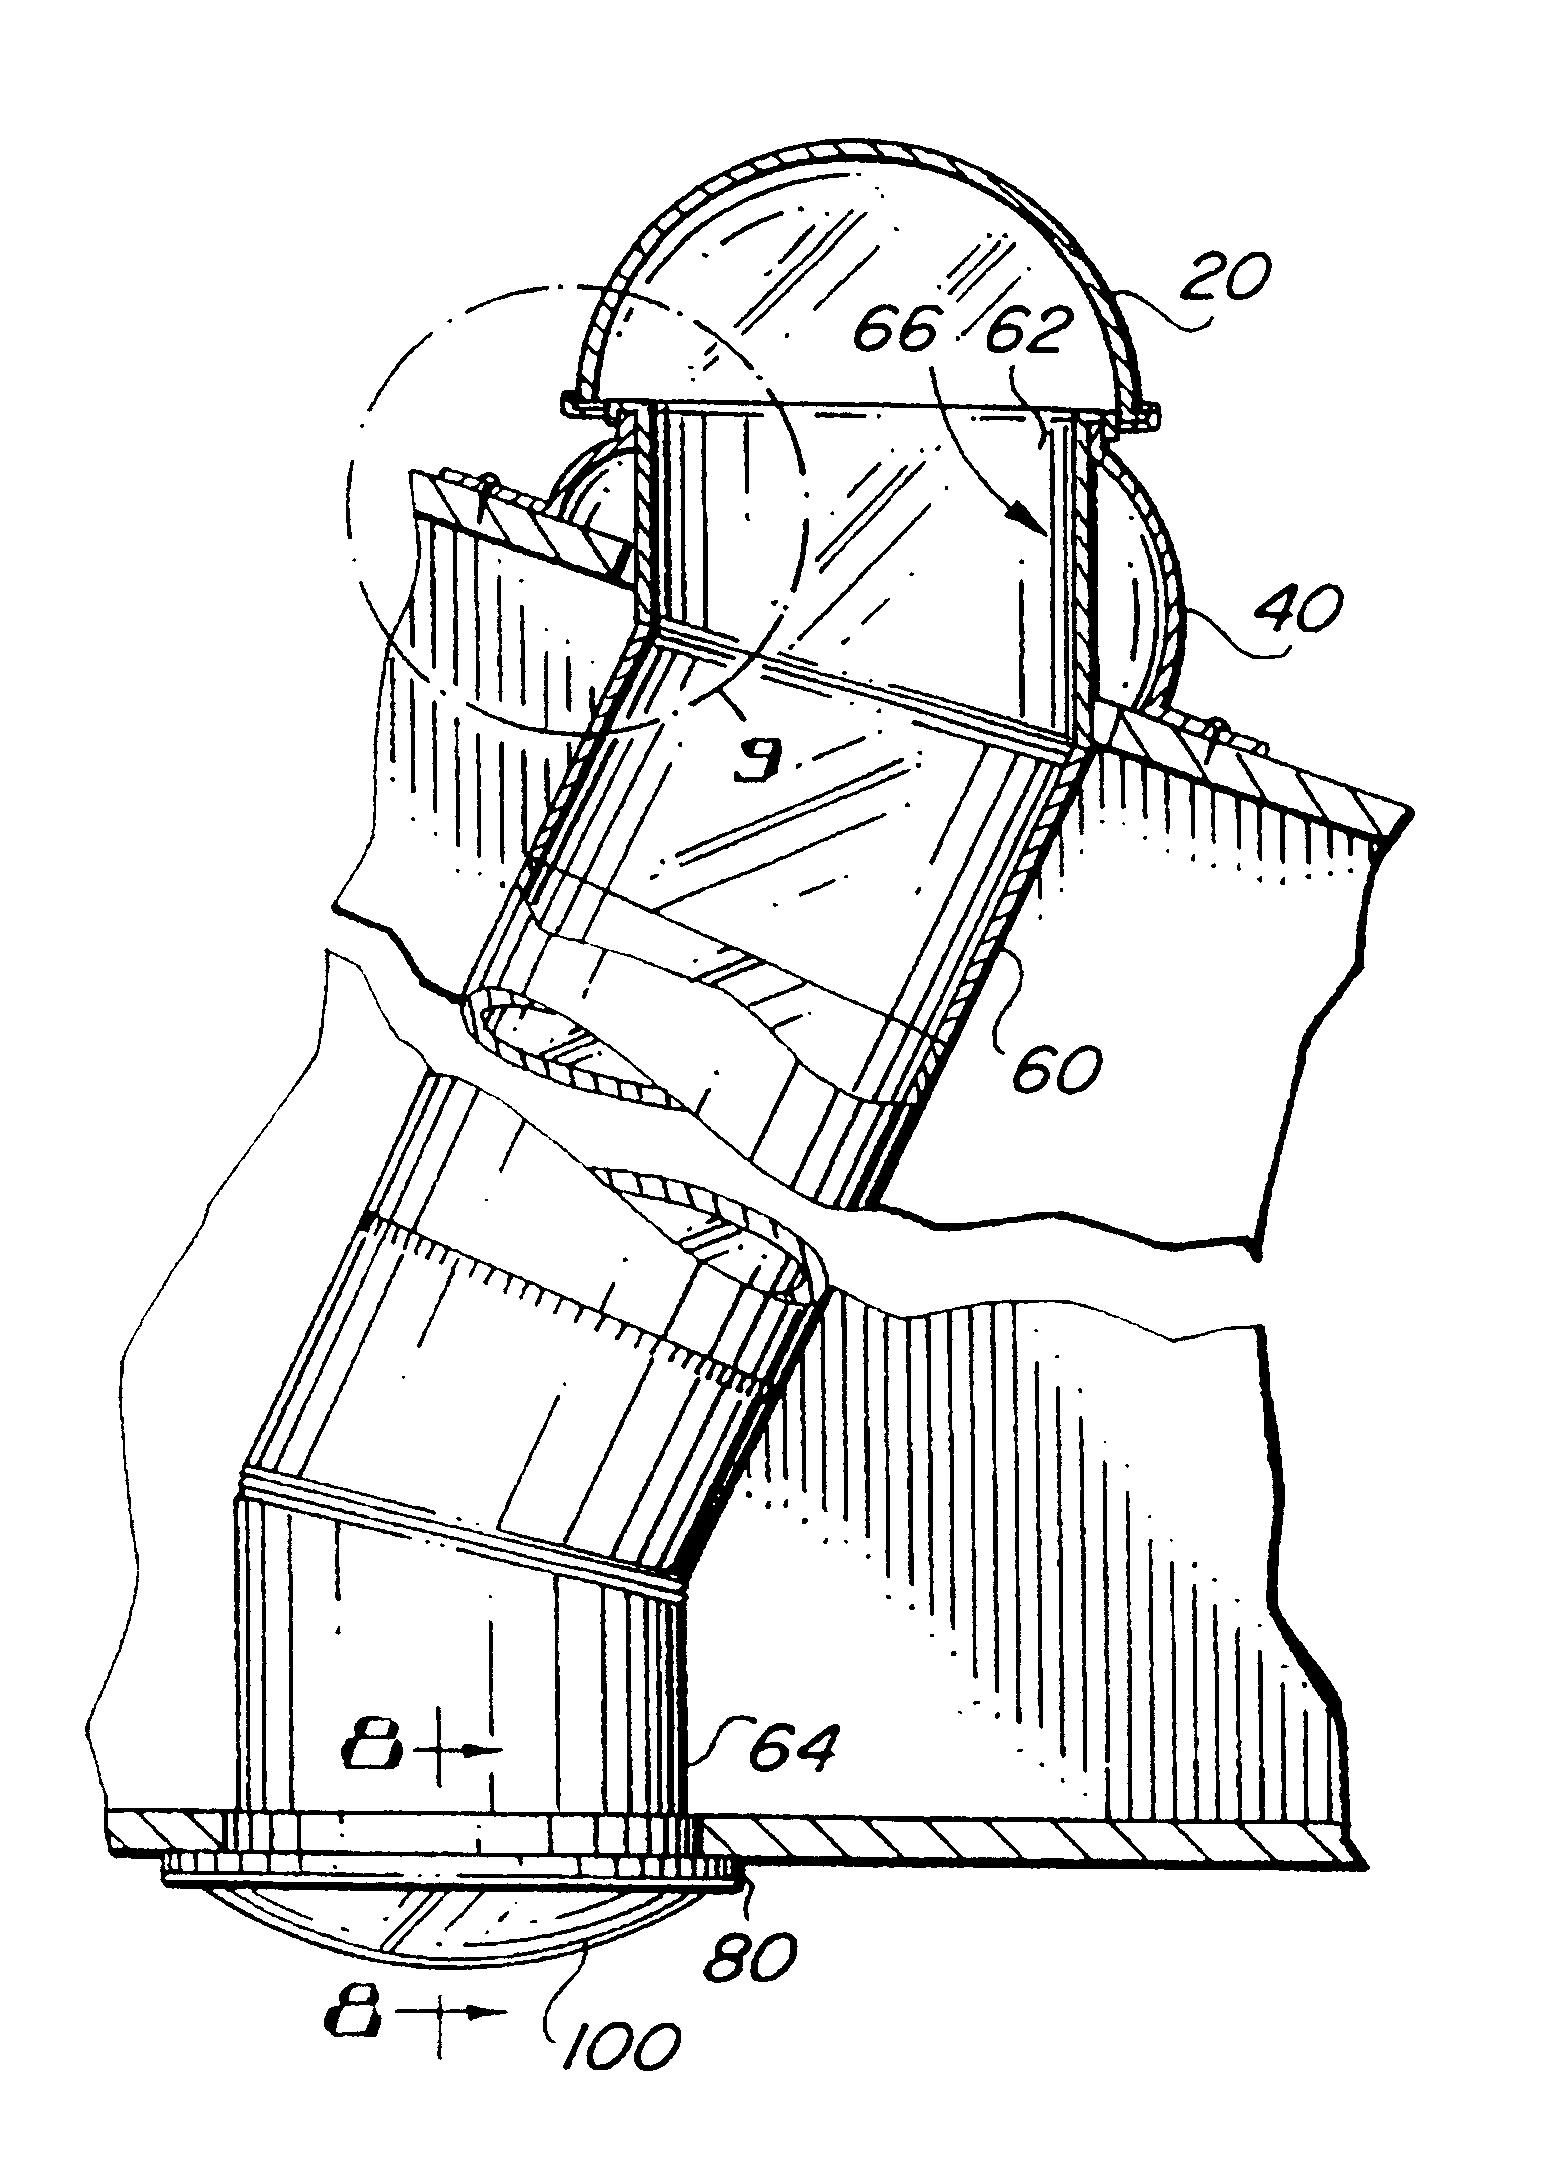 Method and apparatus for a tubular skylight system